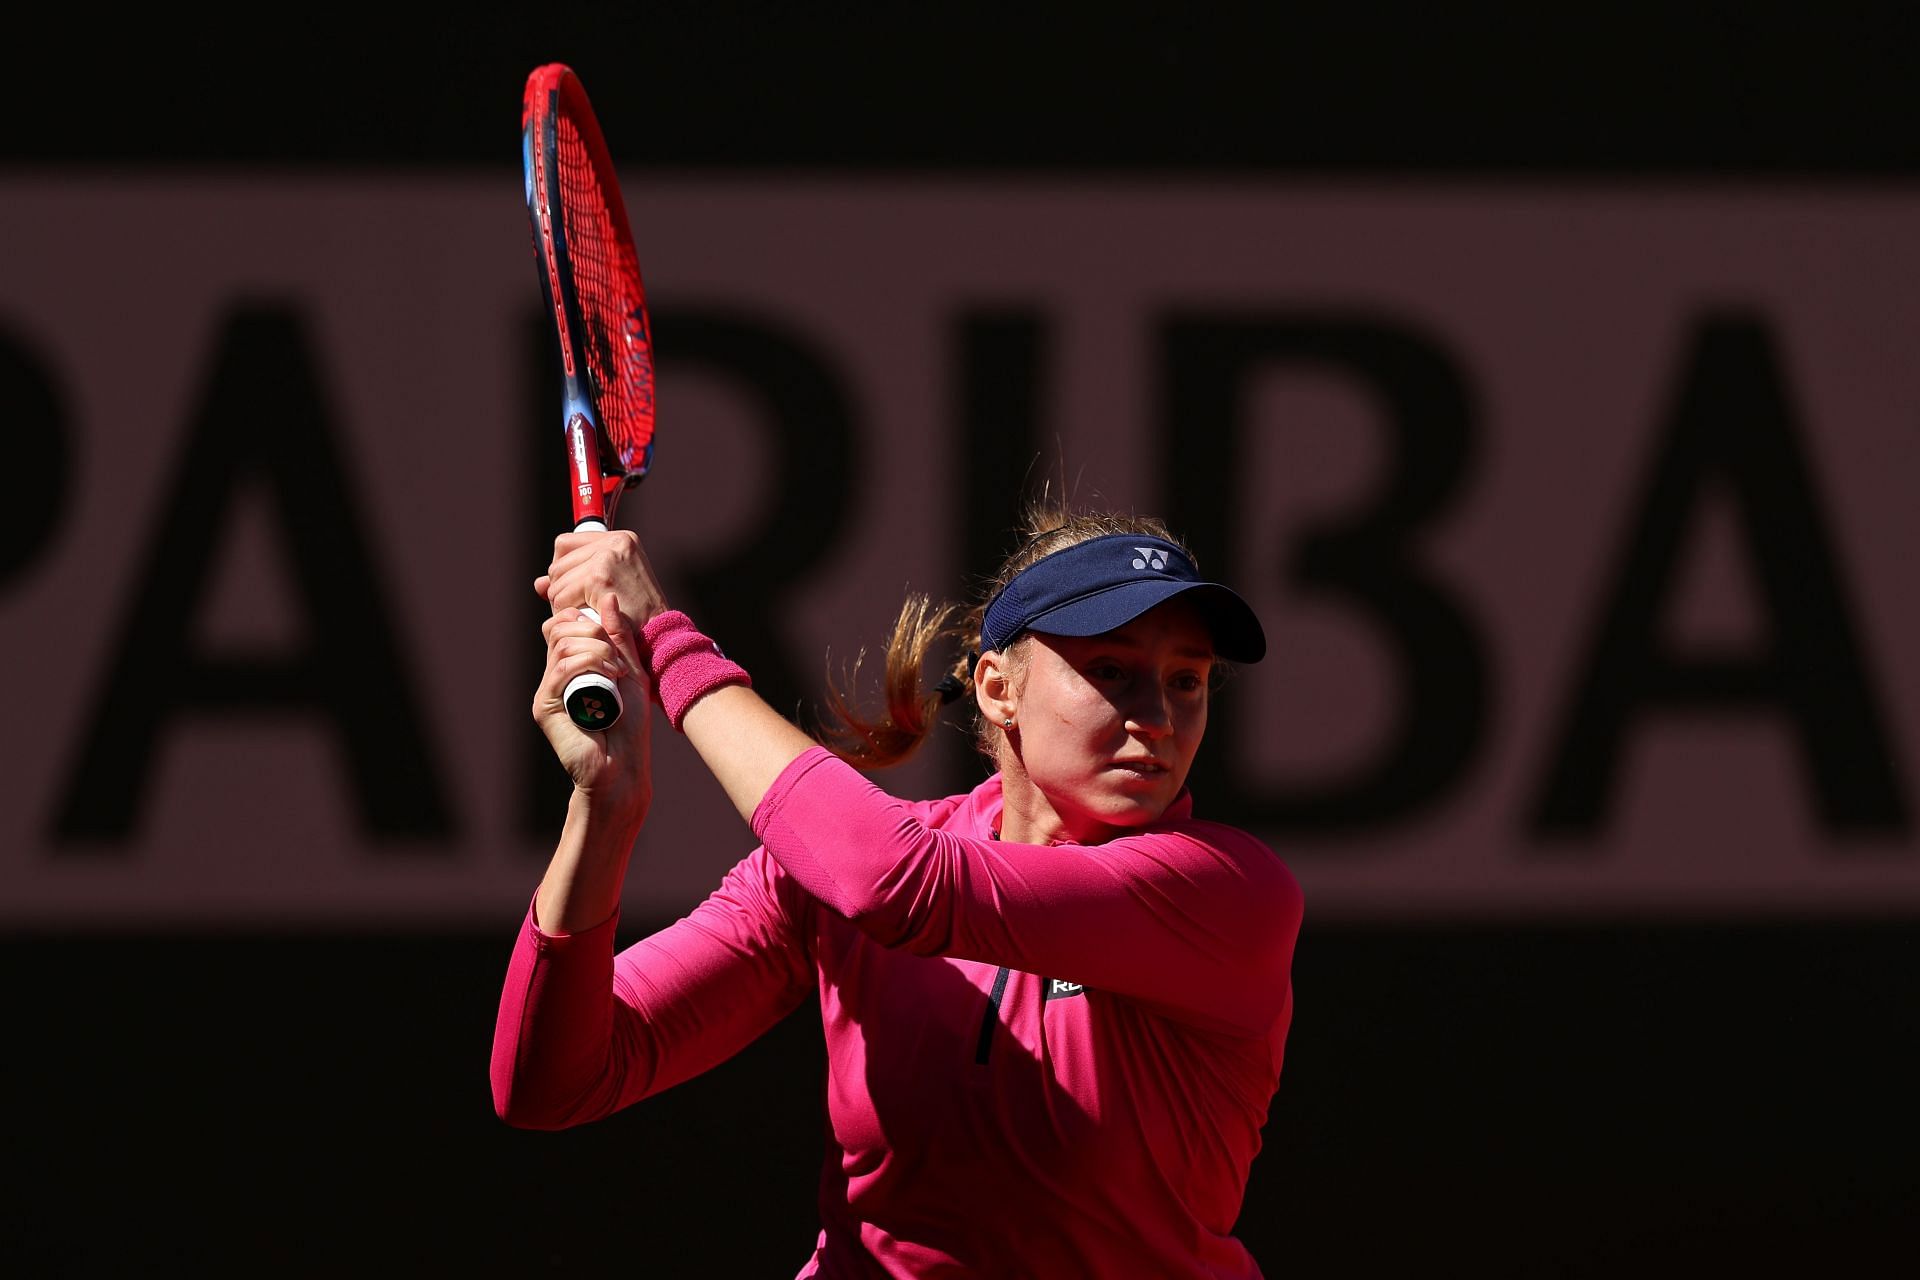 Rybakina strikes the ball at the 2023 French Open